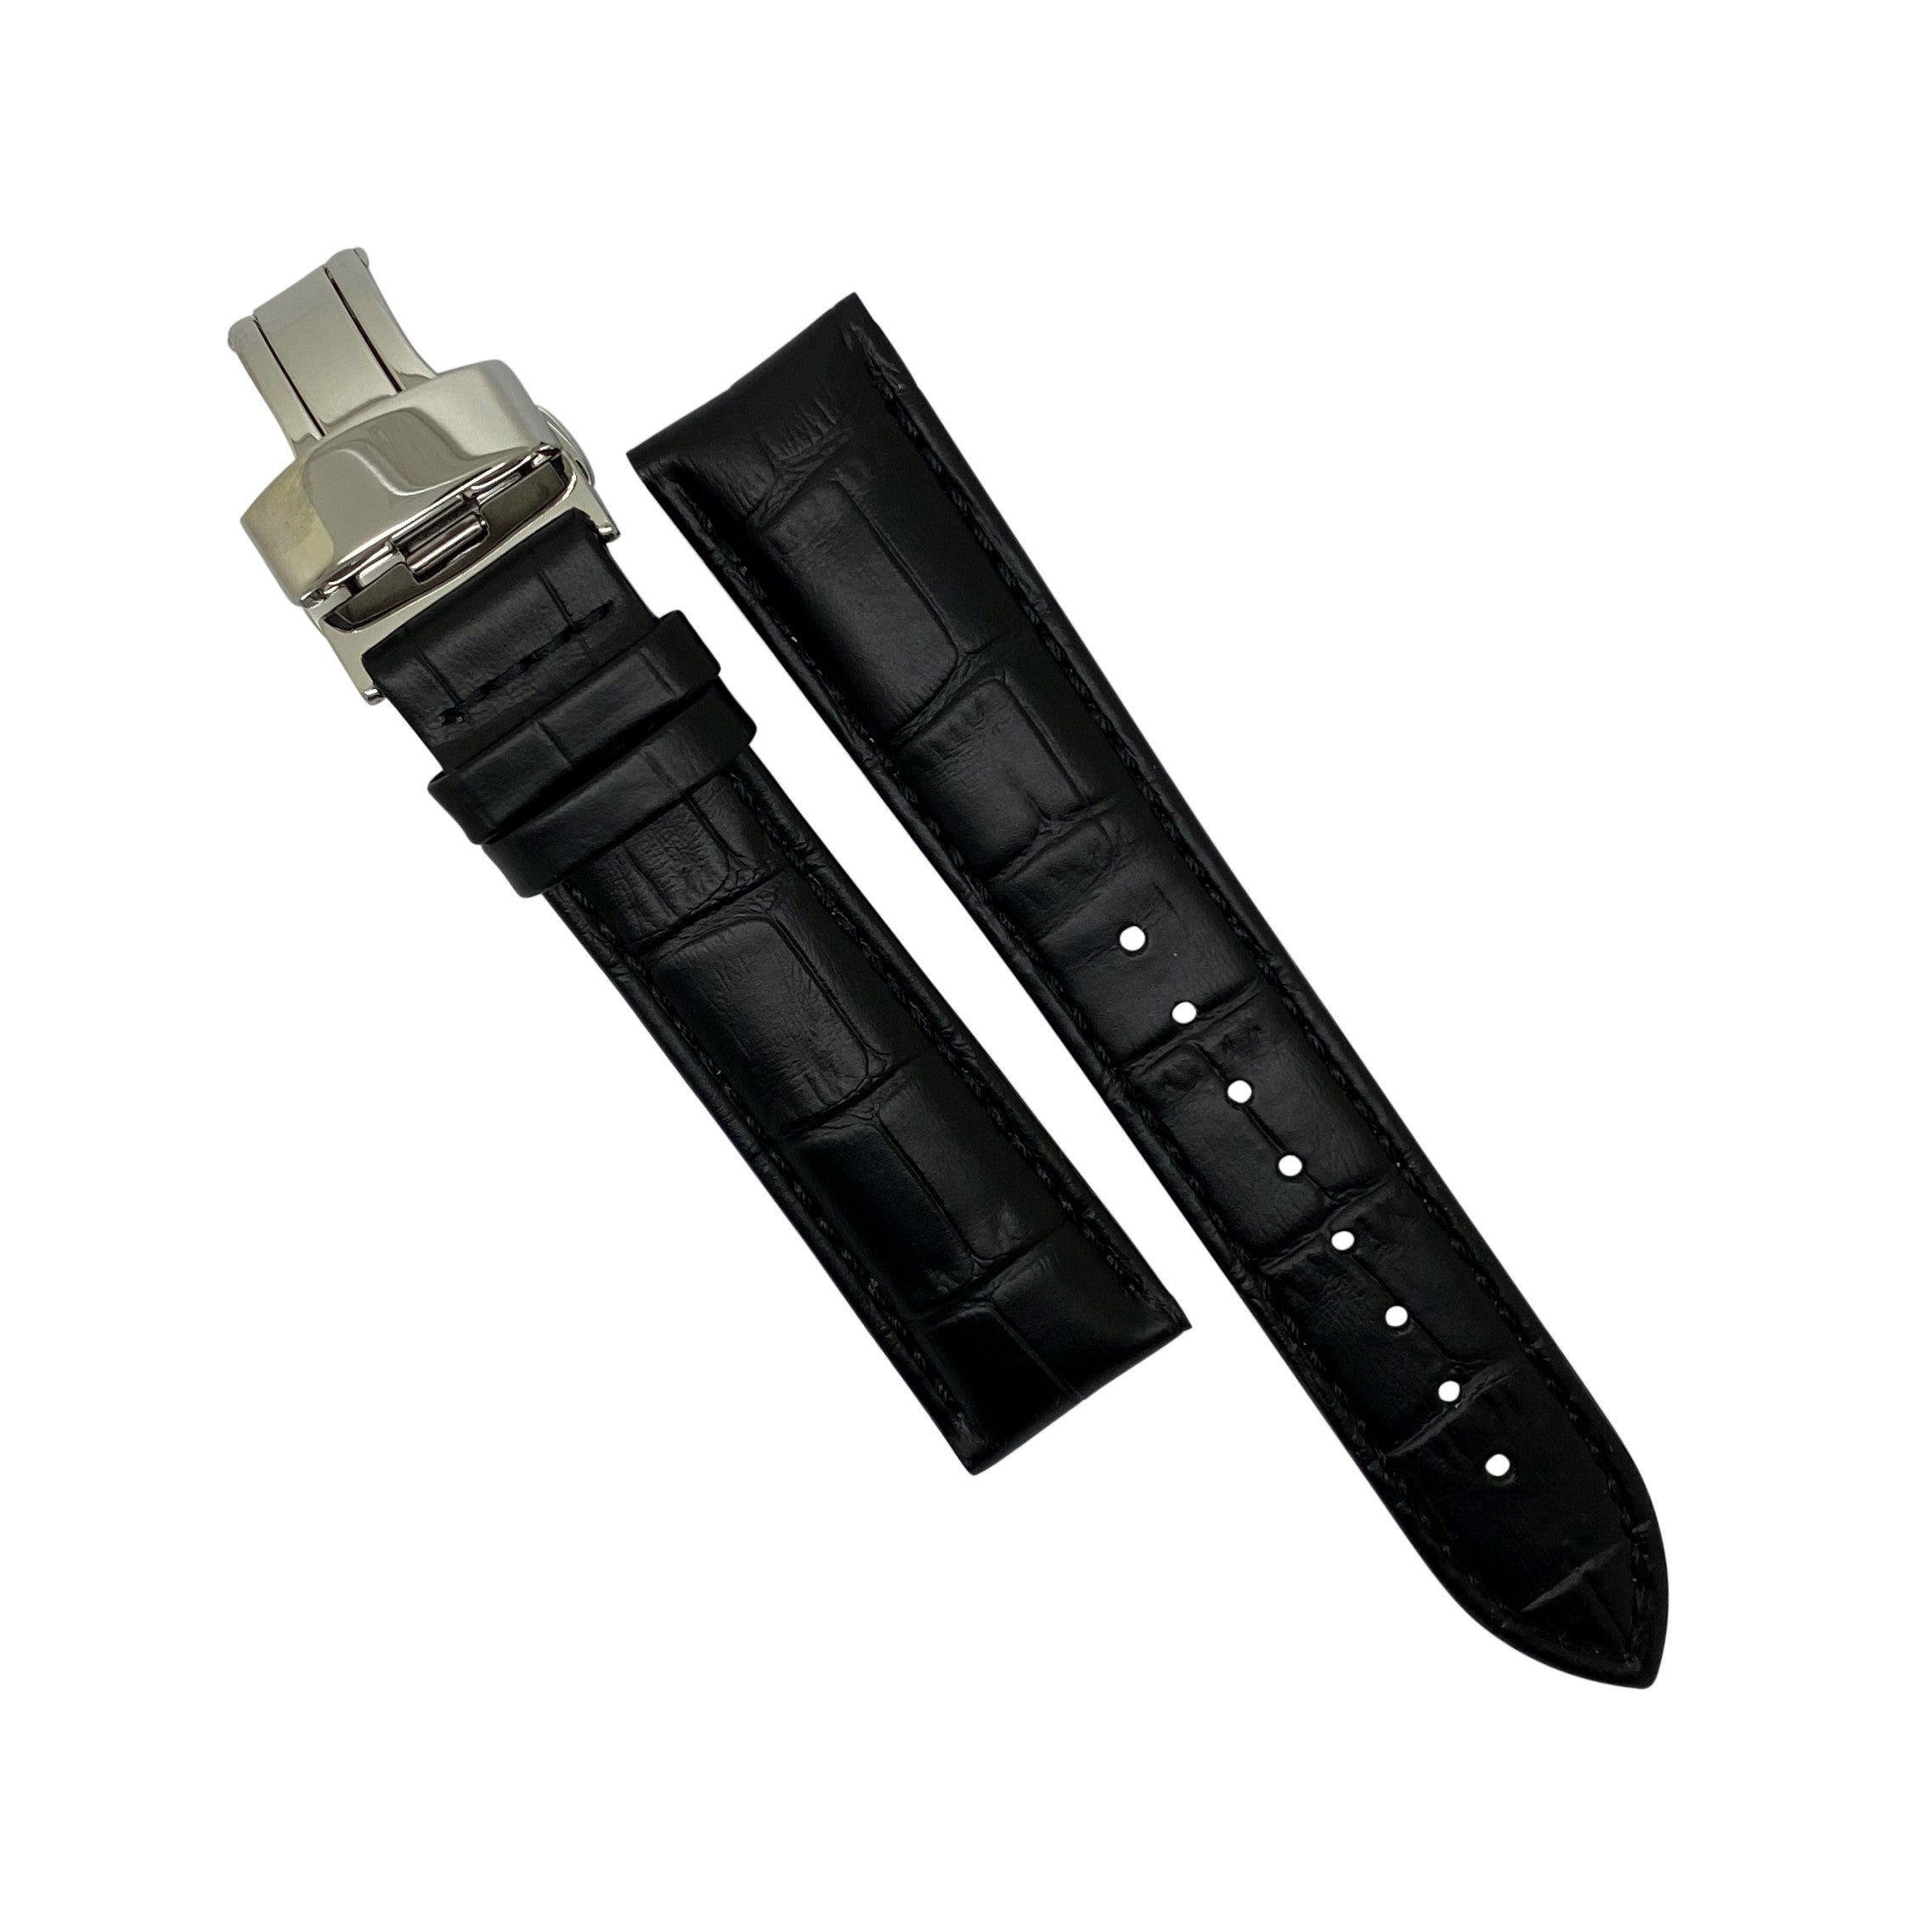 Genuine Croc Pattern Leather Watch Strap in Black w/ Butterfly Clasp